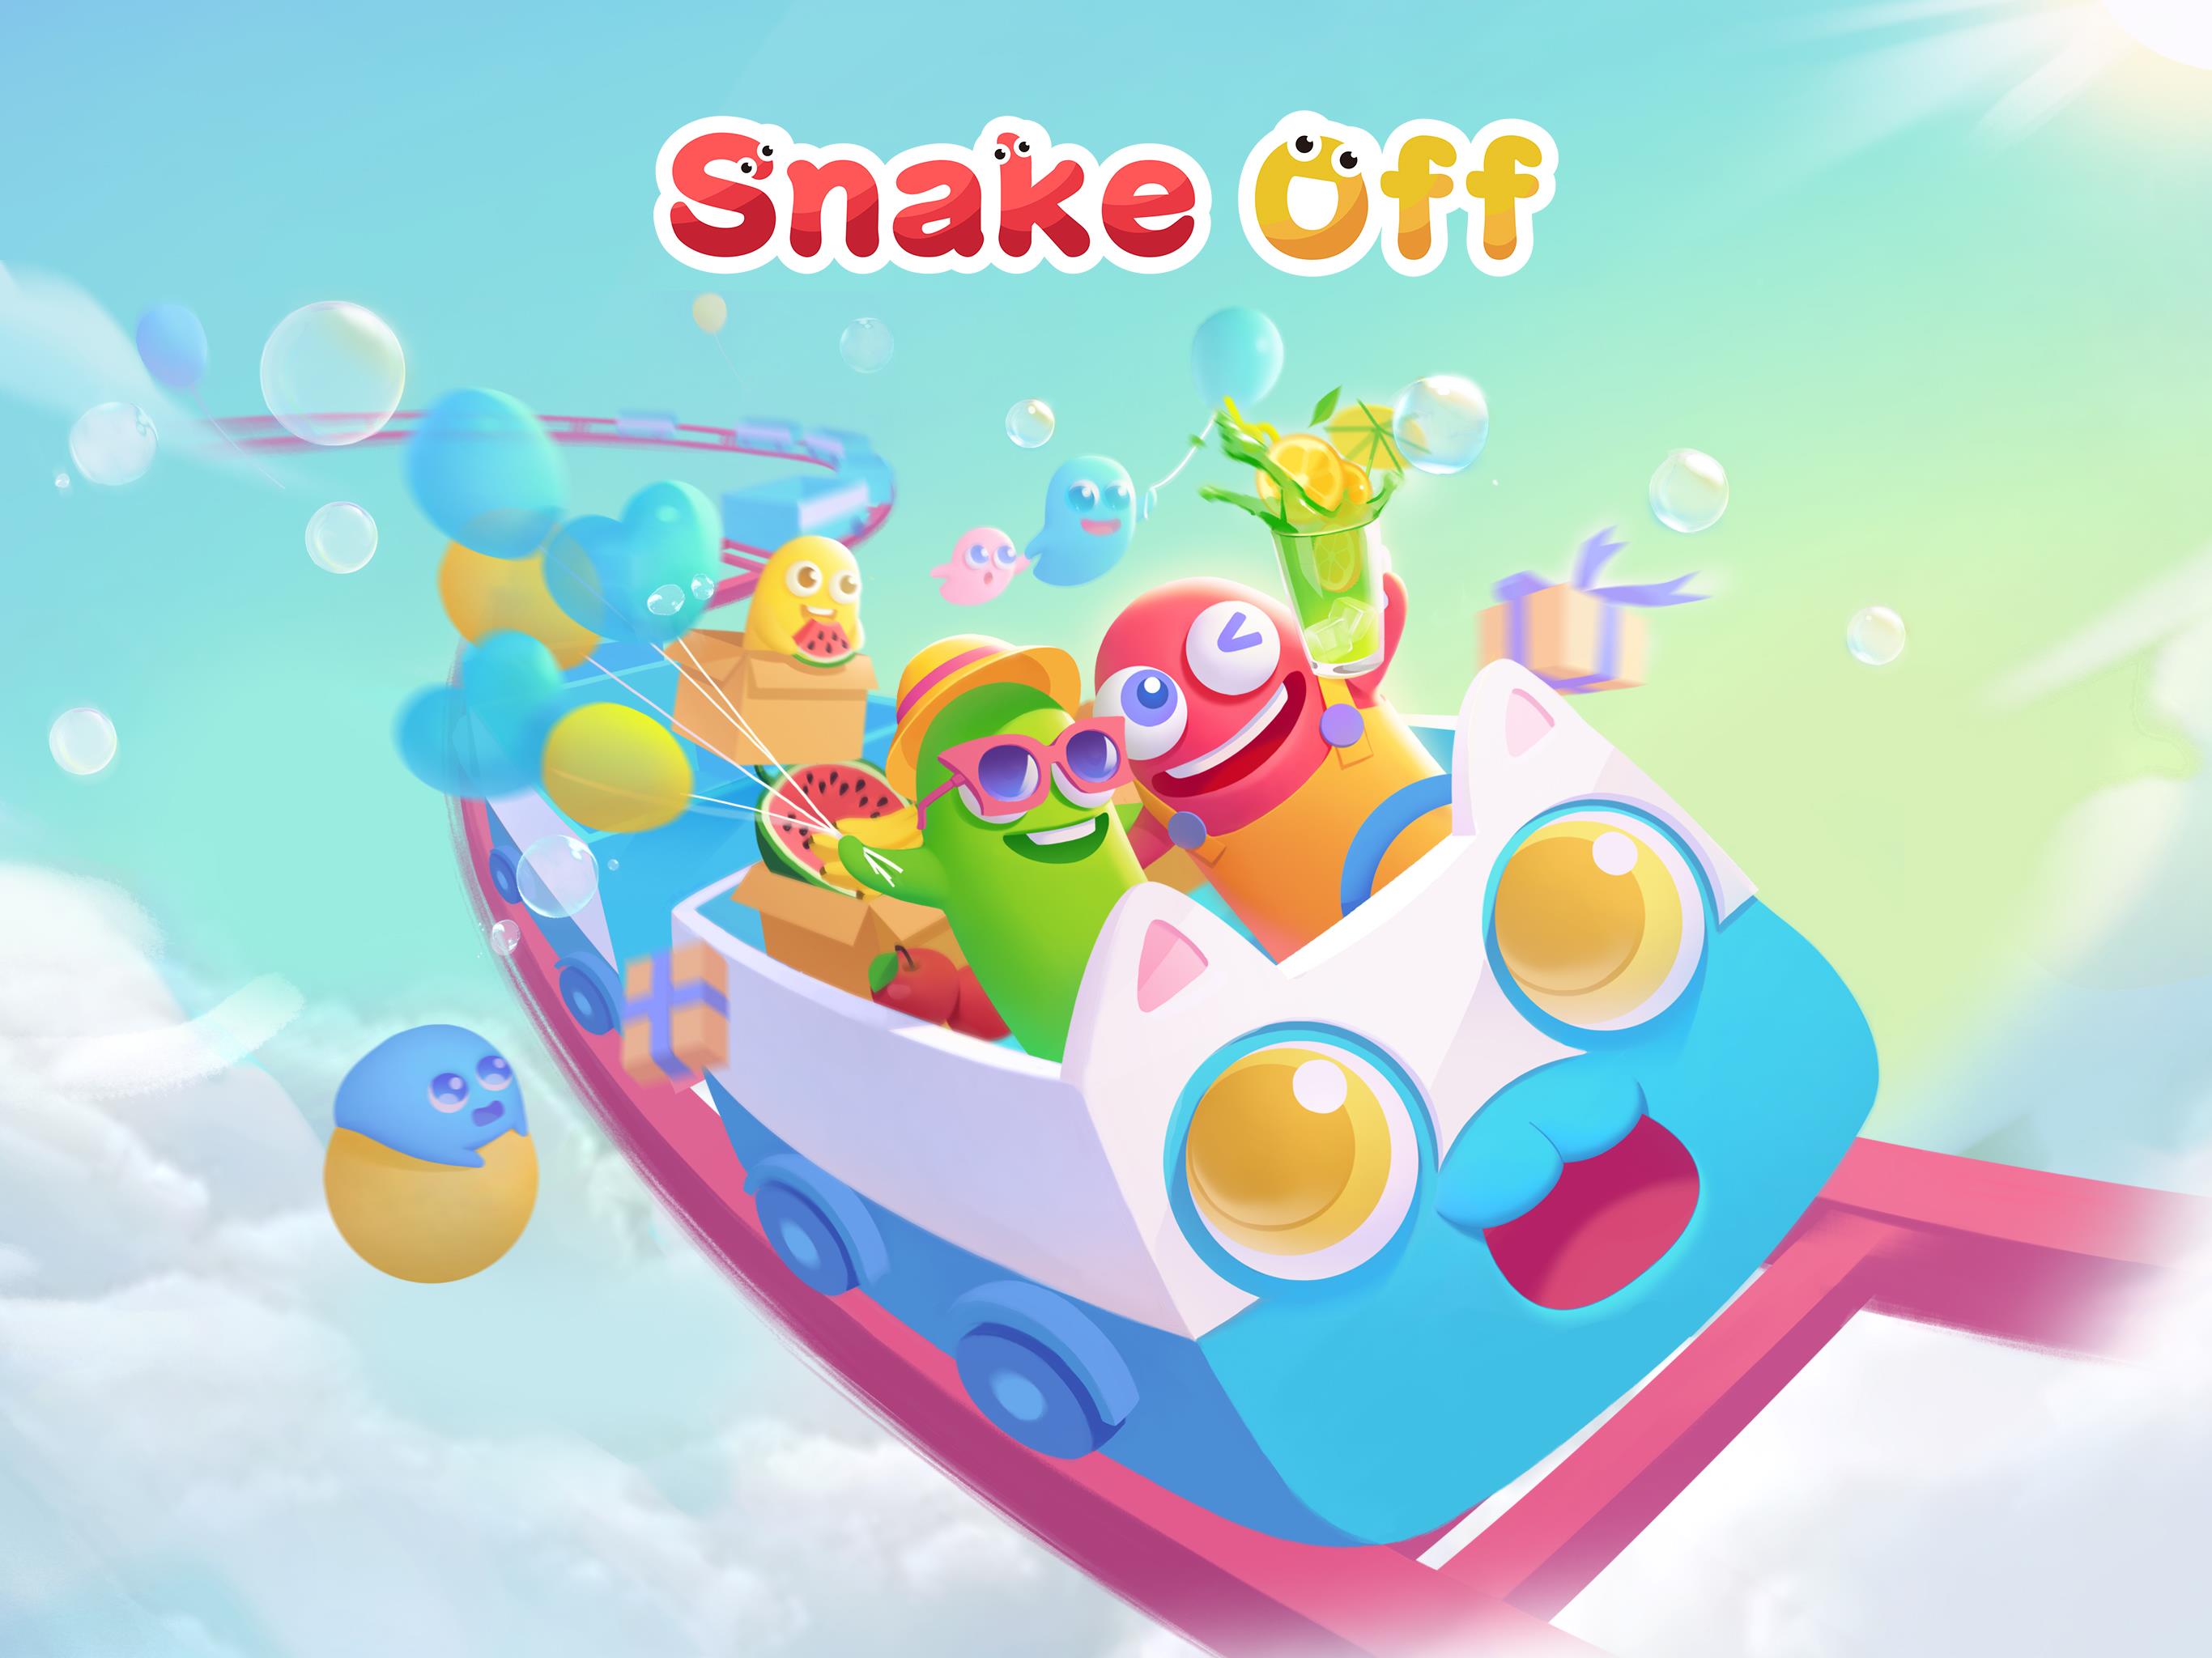 Snake Off - More Play,More Fun Screenshot 11